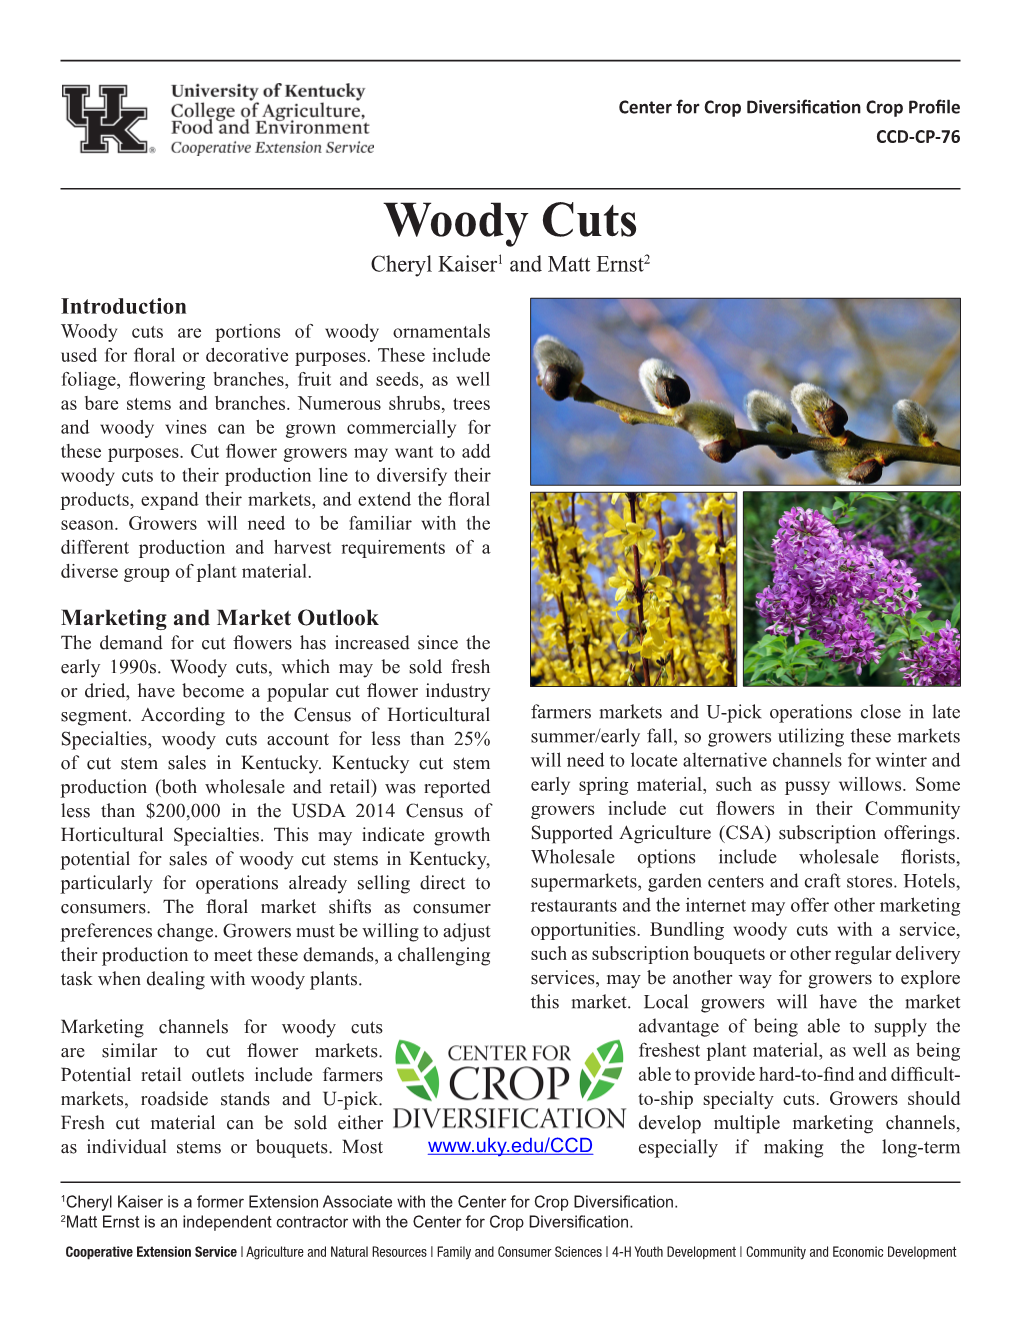 CCD Woody Cuts